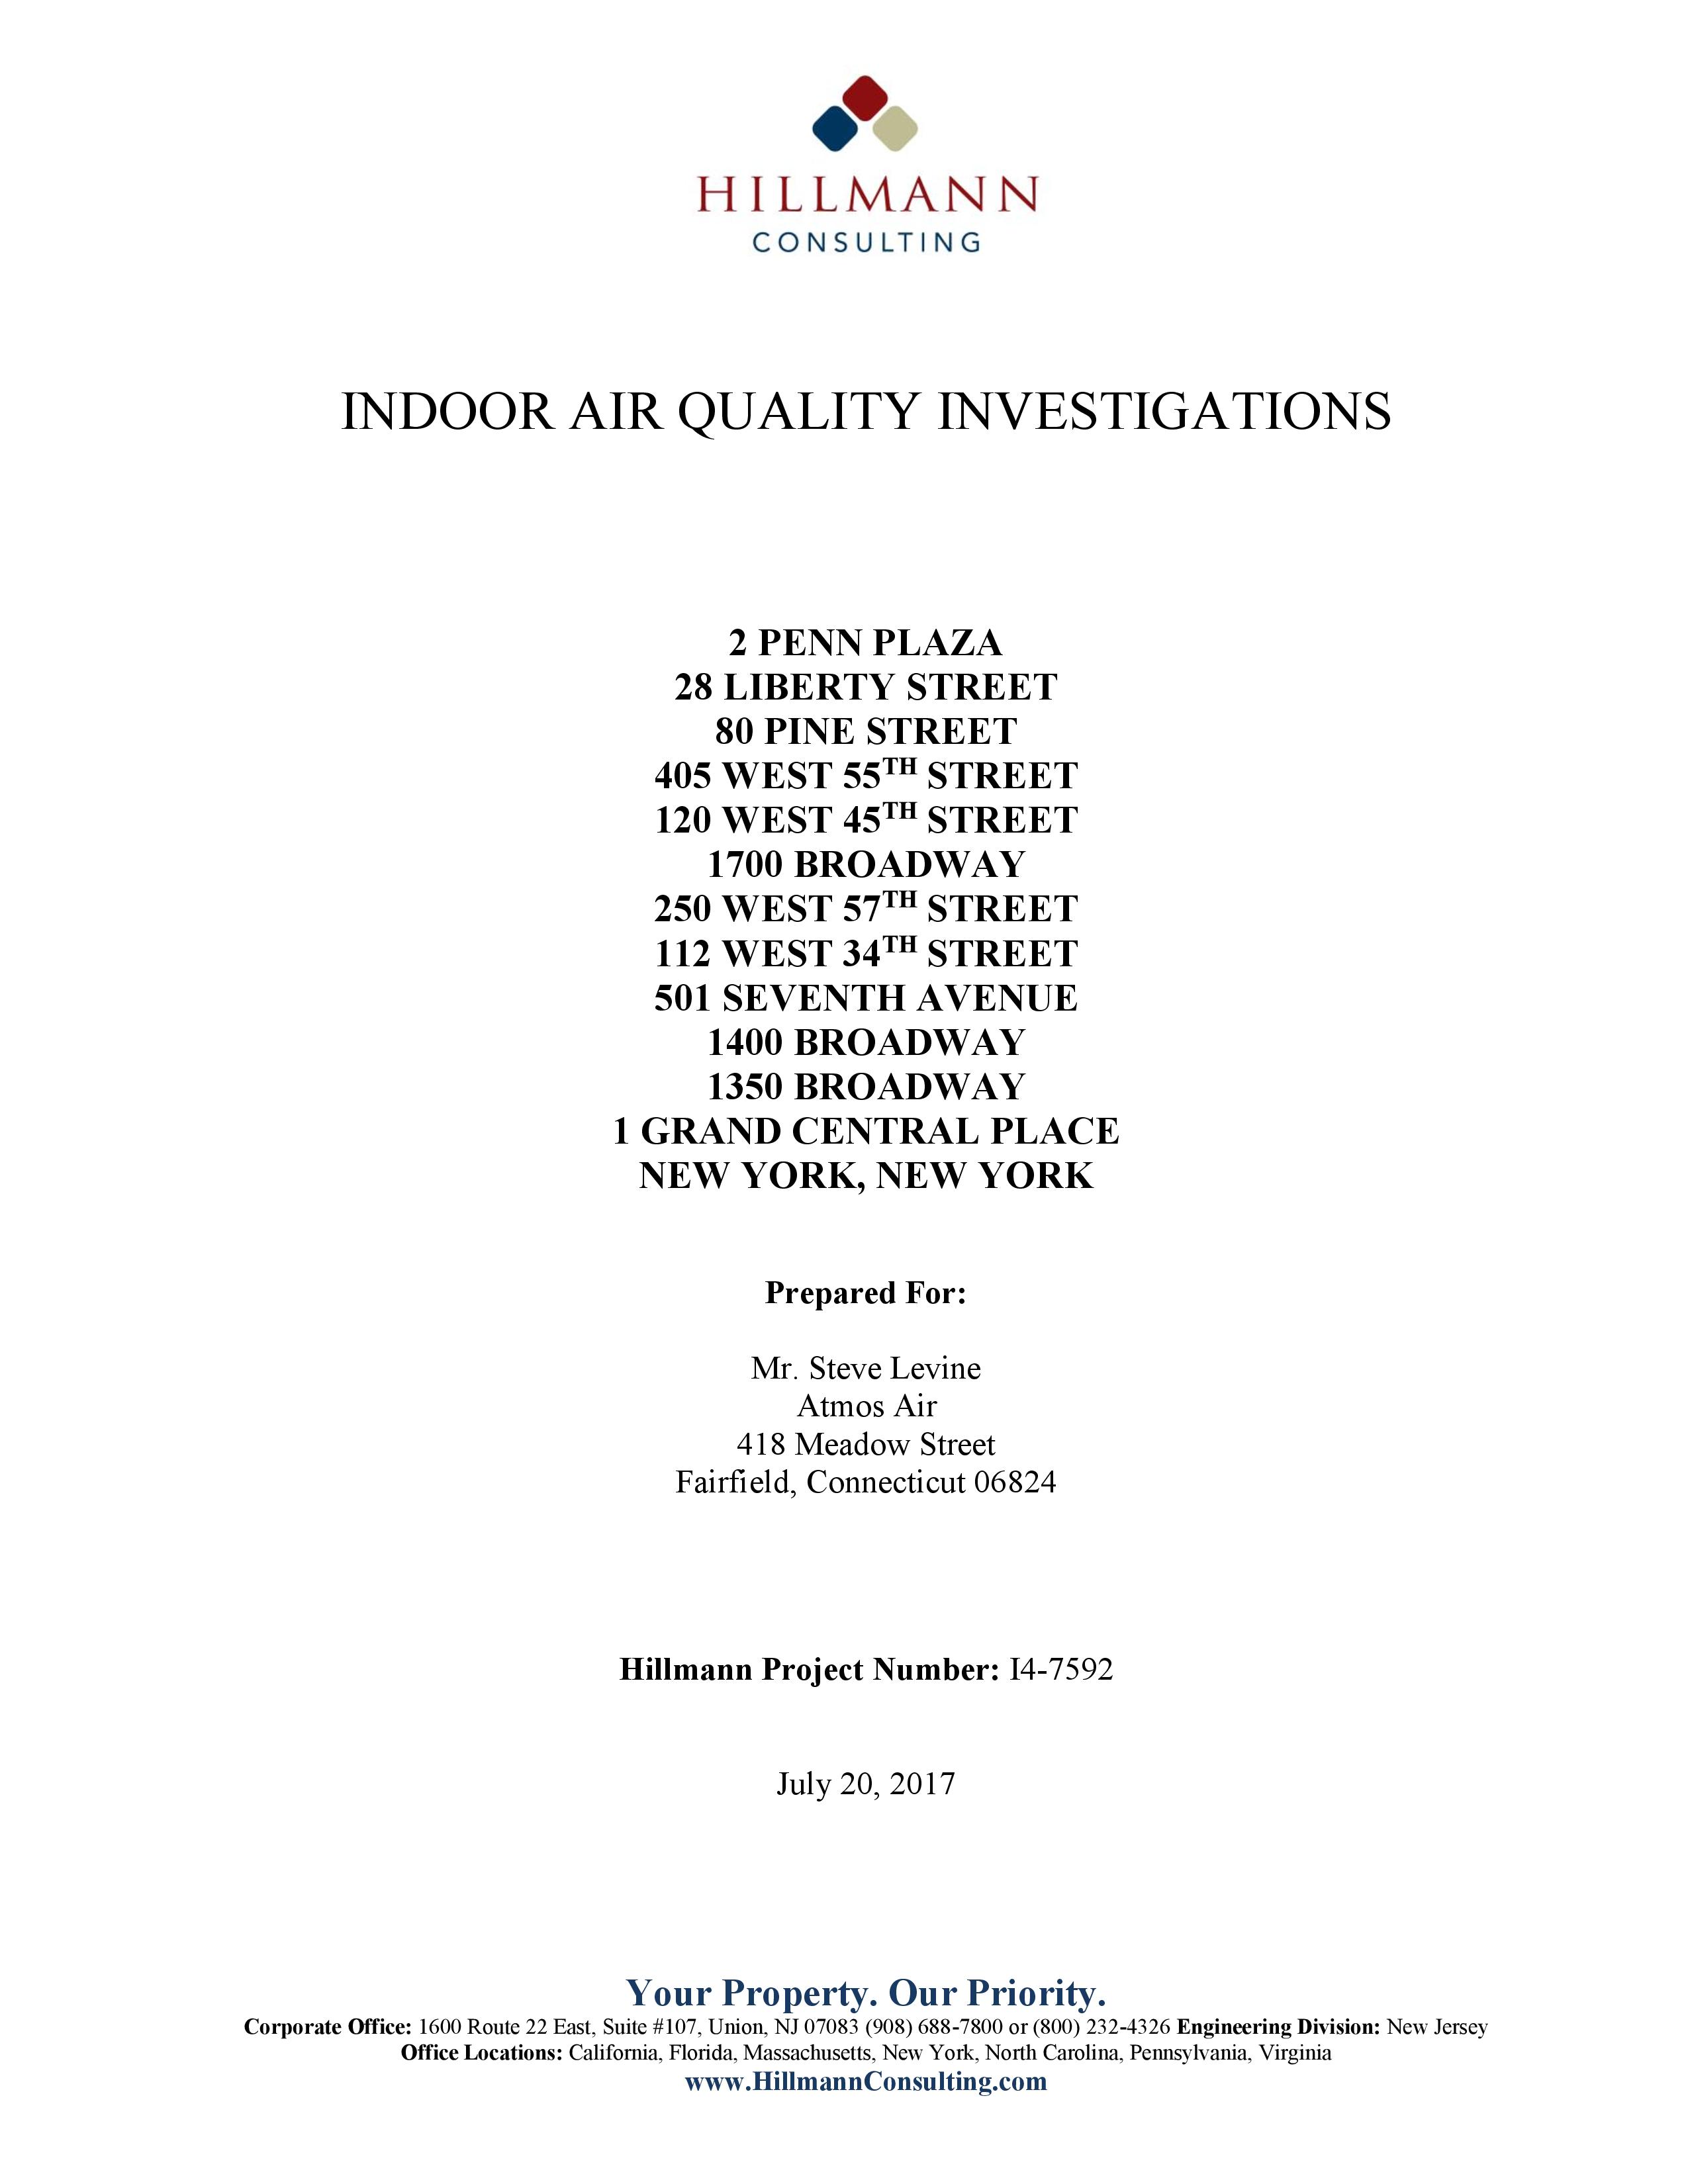 Chứng nhận I4-7592 AtmosAir - NYC, NY - Ozone IAQ